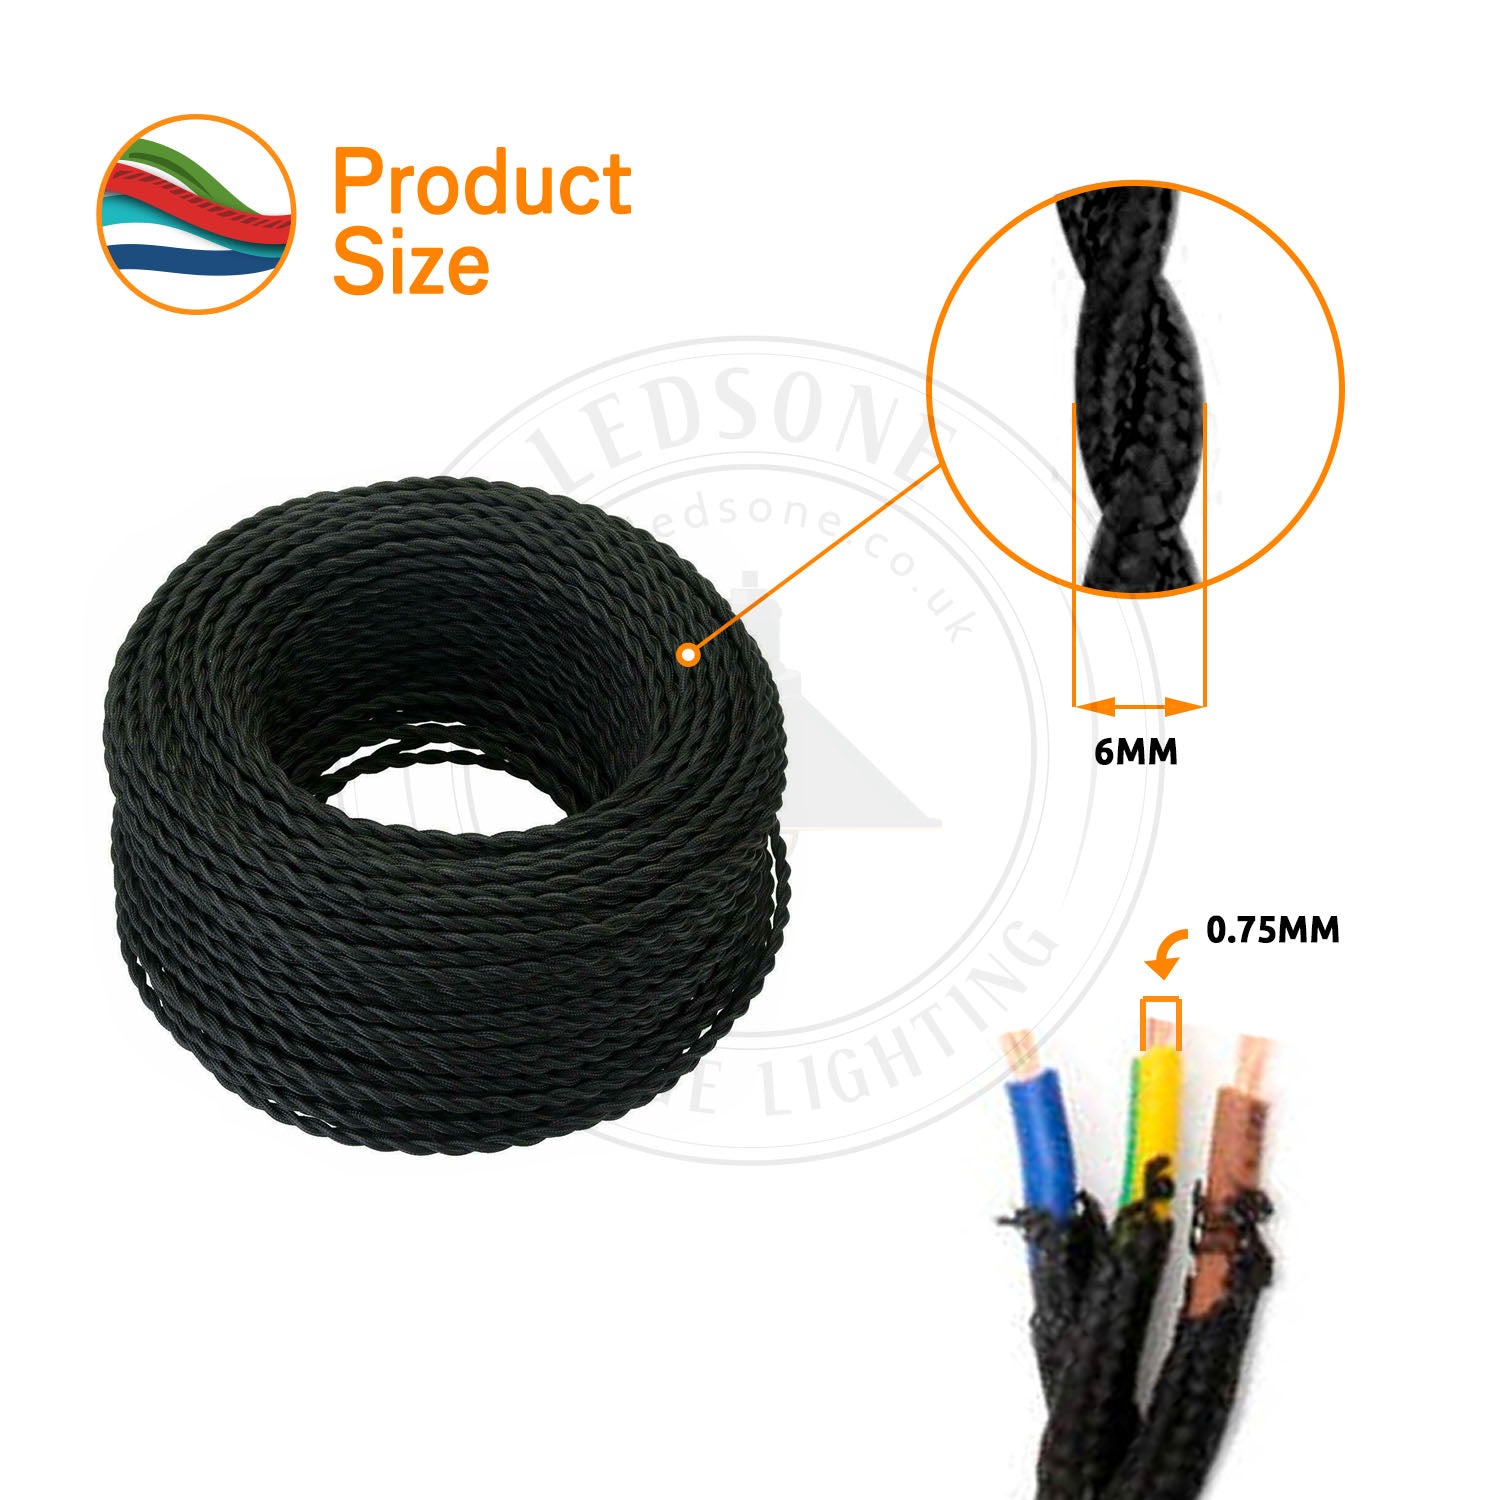 5m 3core Twisted Orange Vintage Electric Fabric Cable Flex 0.75mm ~4839